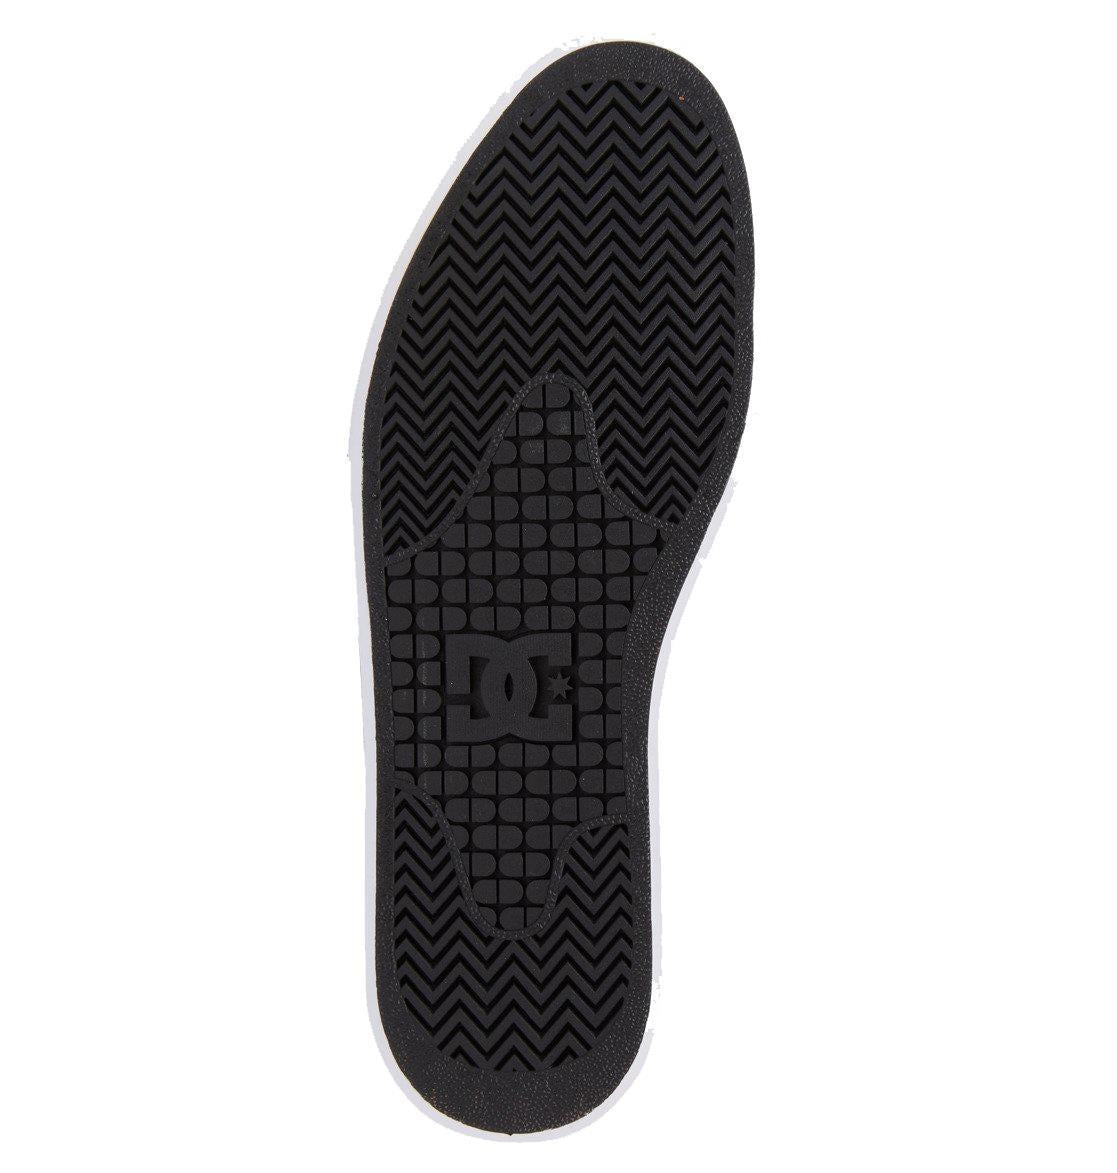 DC Shoes Co Manual RT S Black White Skate Shoes